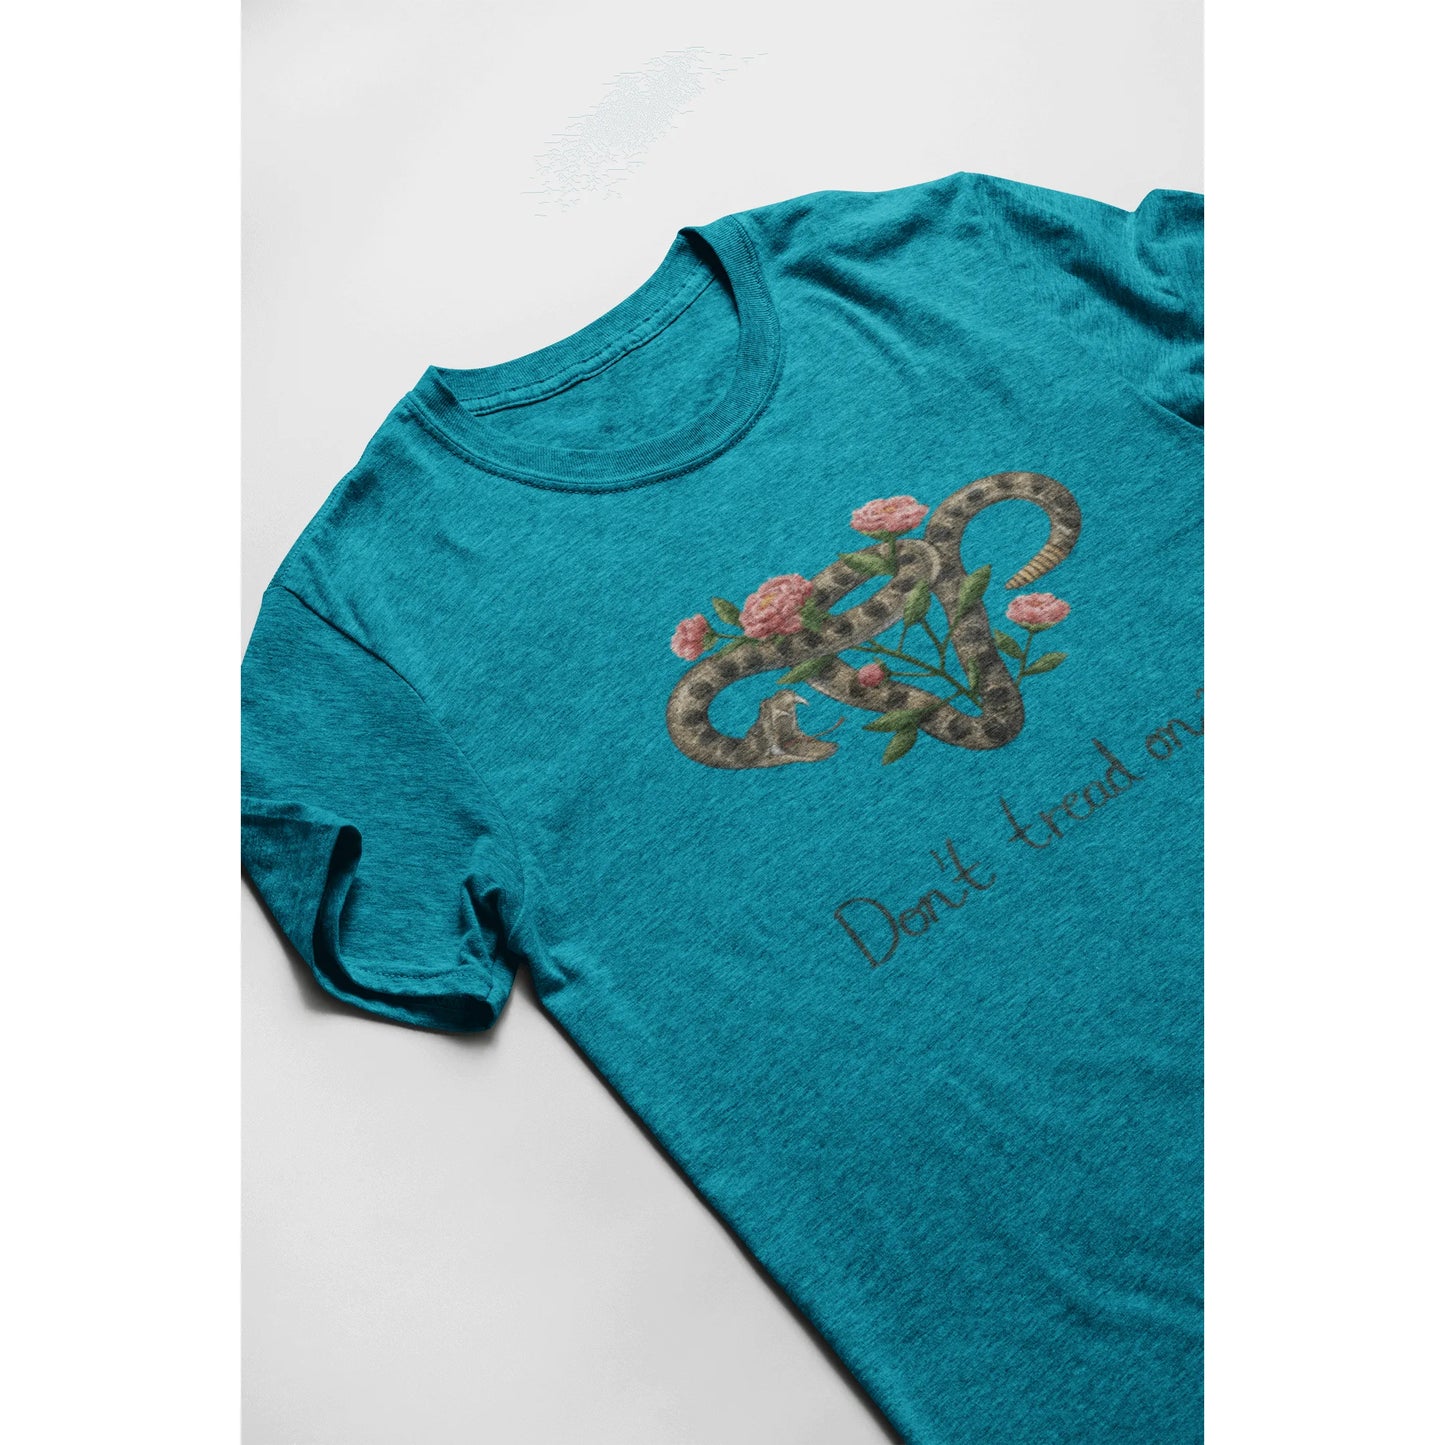 Don’t Tread Pro-Choice Floral Uterus T-Shirt